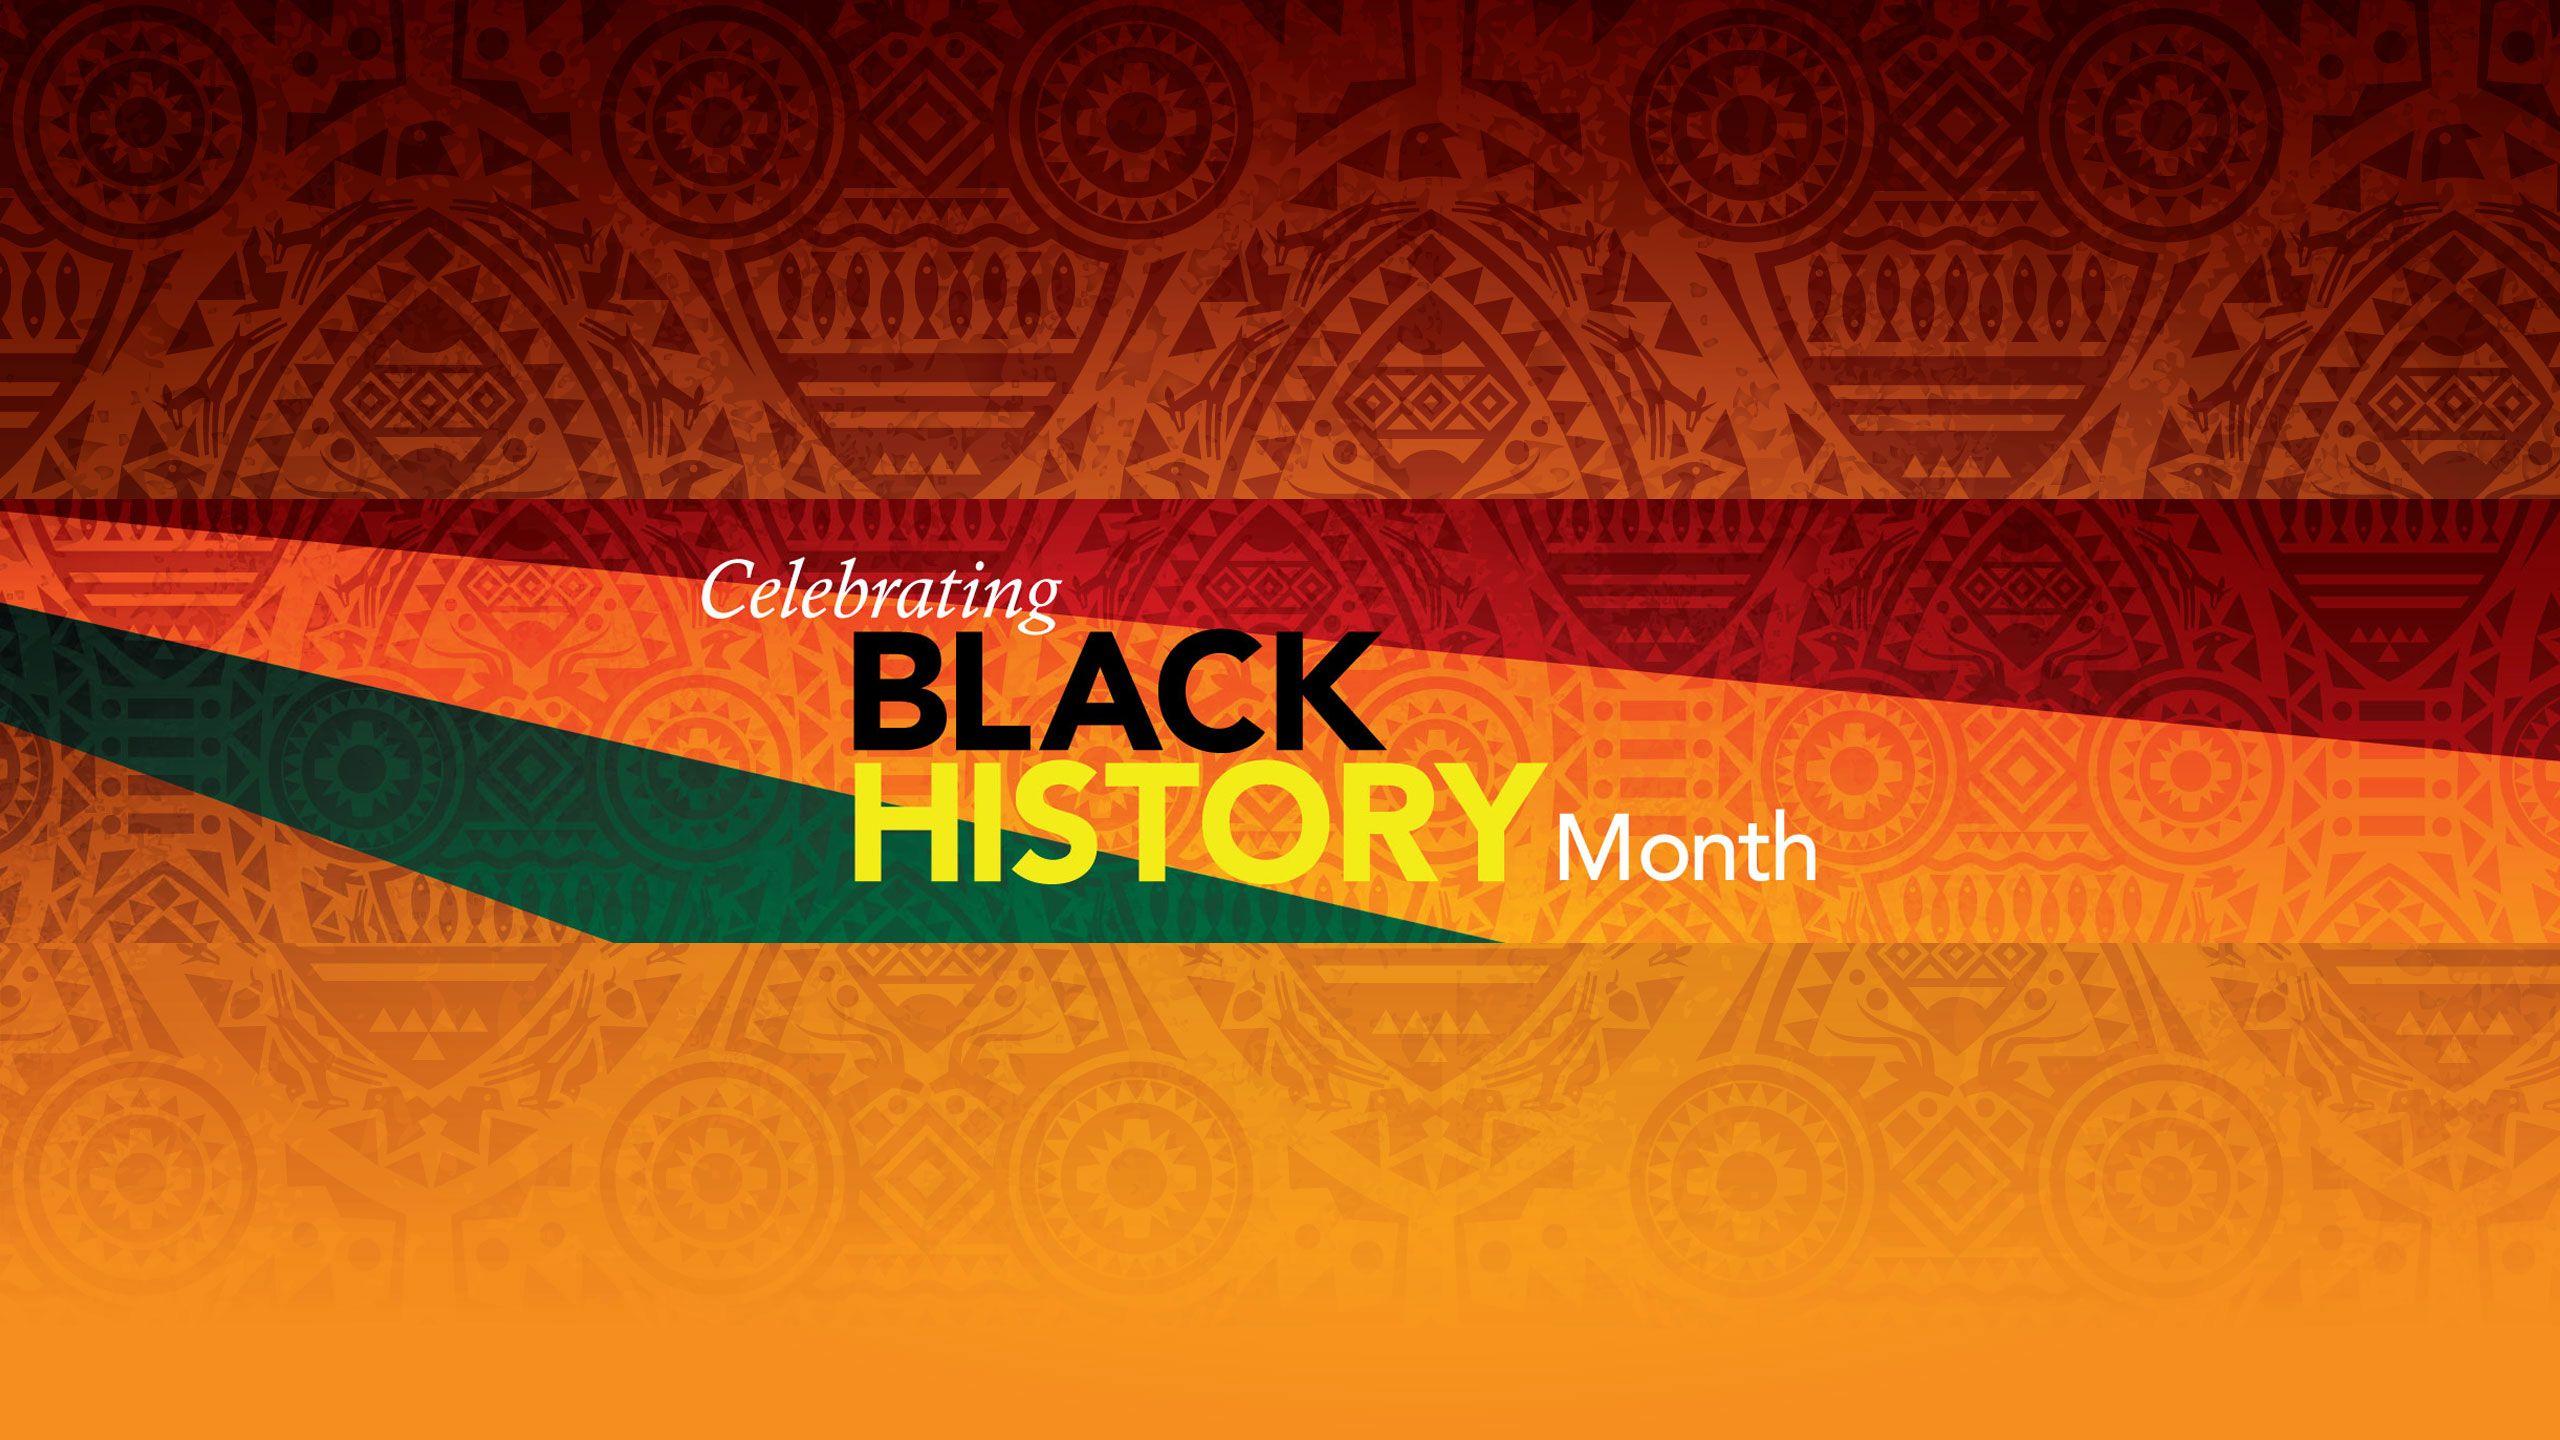 Celebrating Black History Month Heroes. Metropolitan